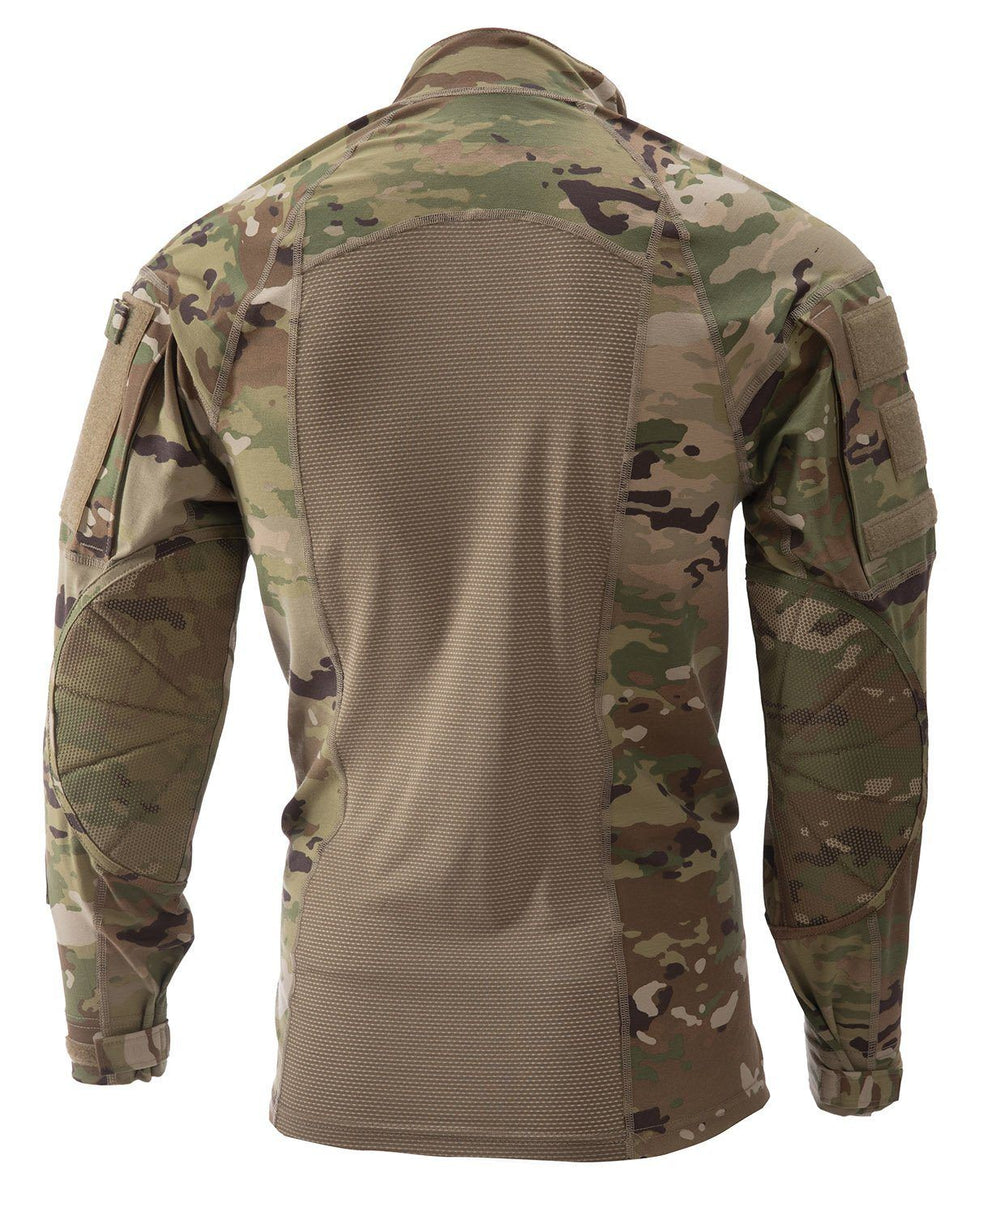 USGI Army ECWCS Generation III Mid-Weight Shirt Sand or Coyote – Bradley's  Surplus